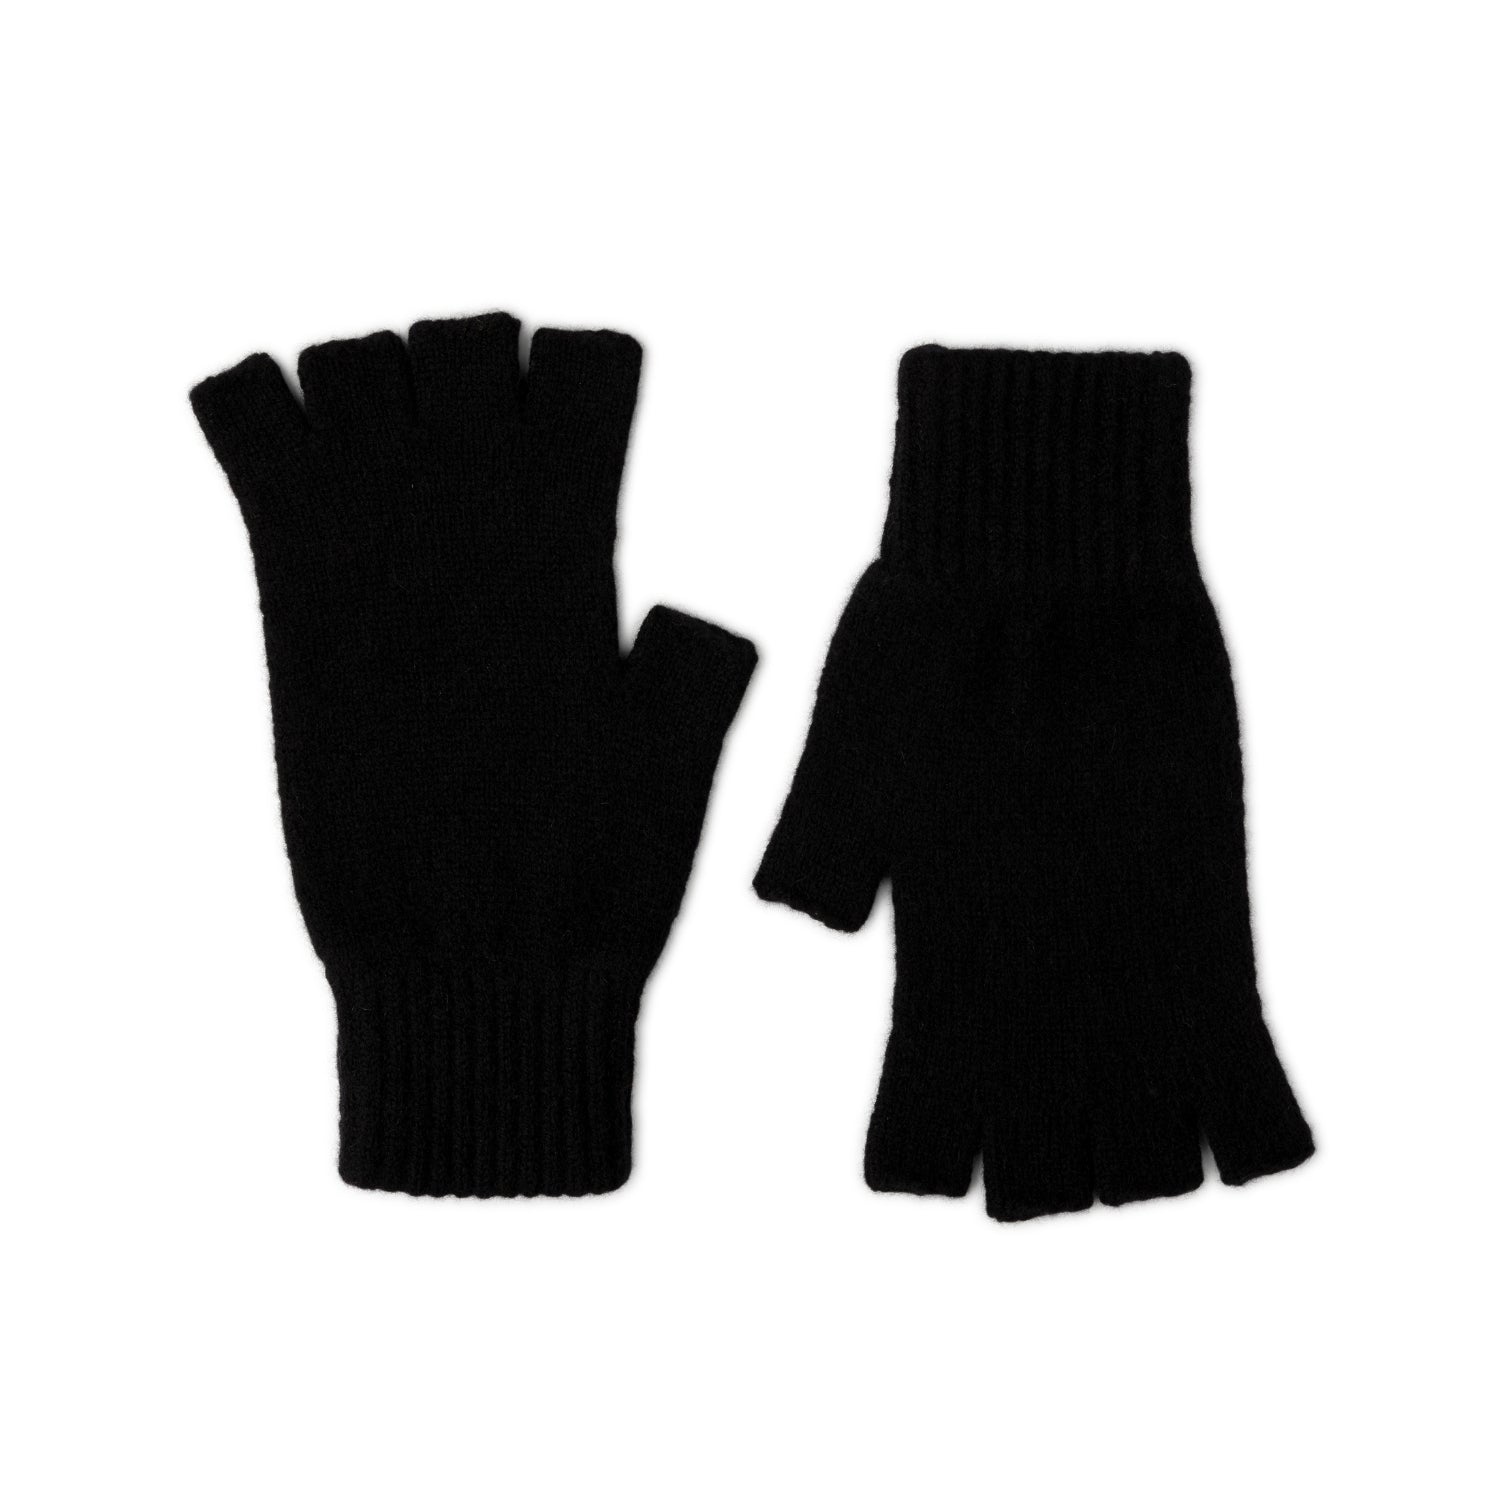 Fingerless Ladies Gloves - Black